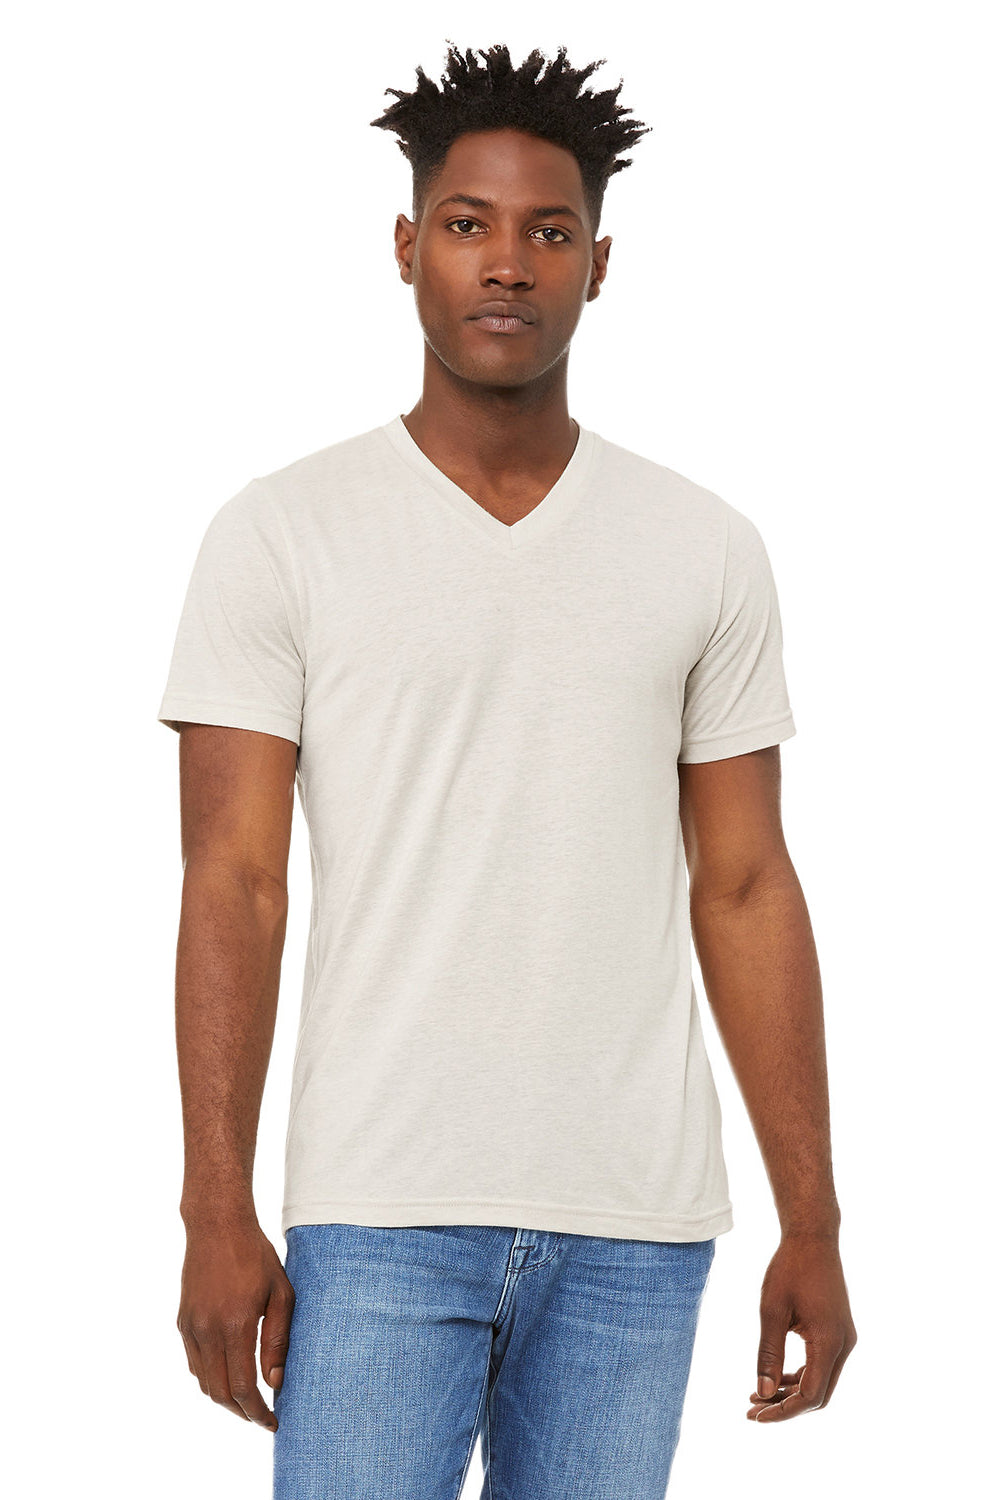 Bella + Canvas BC3415/3415C/3415 Mens Short Sleeve V-Neck T-Shirt Cement Grey Model Front